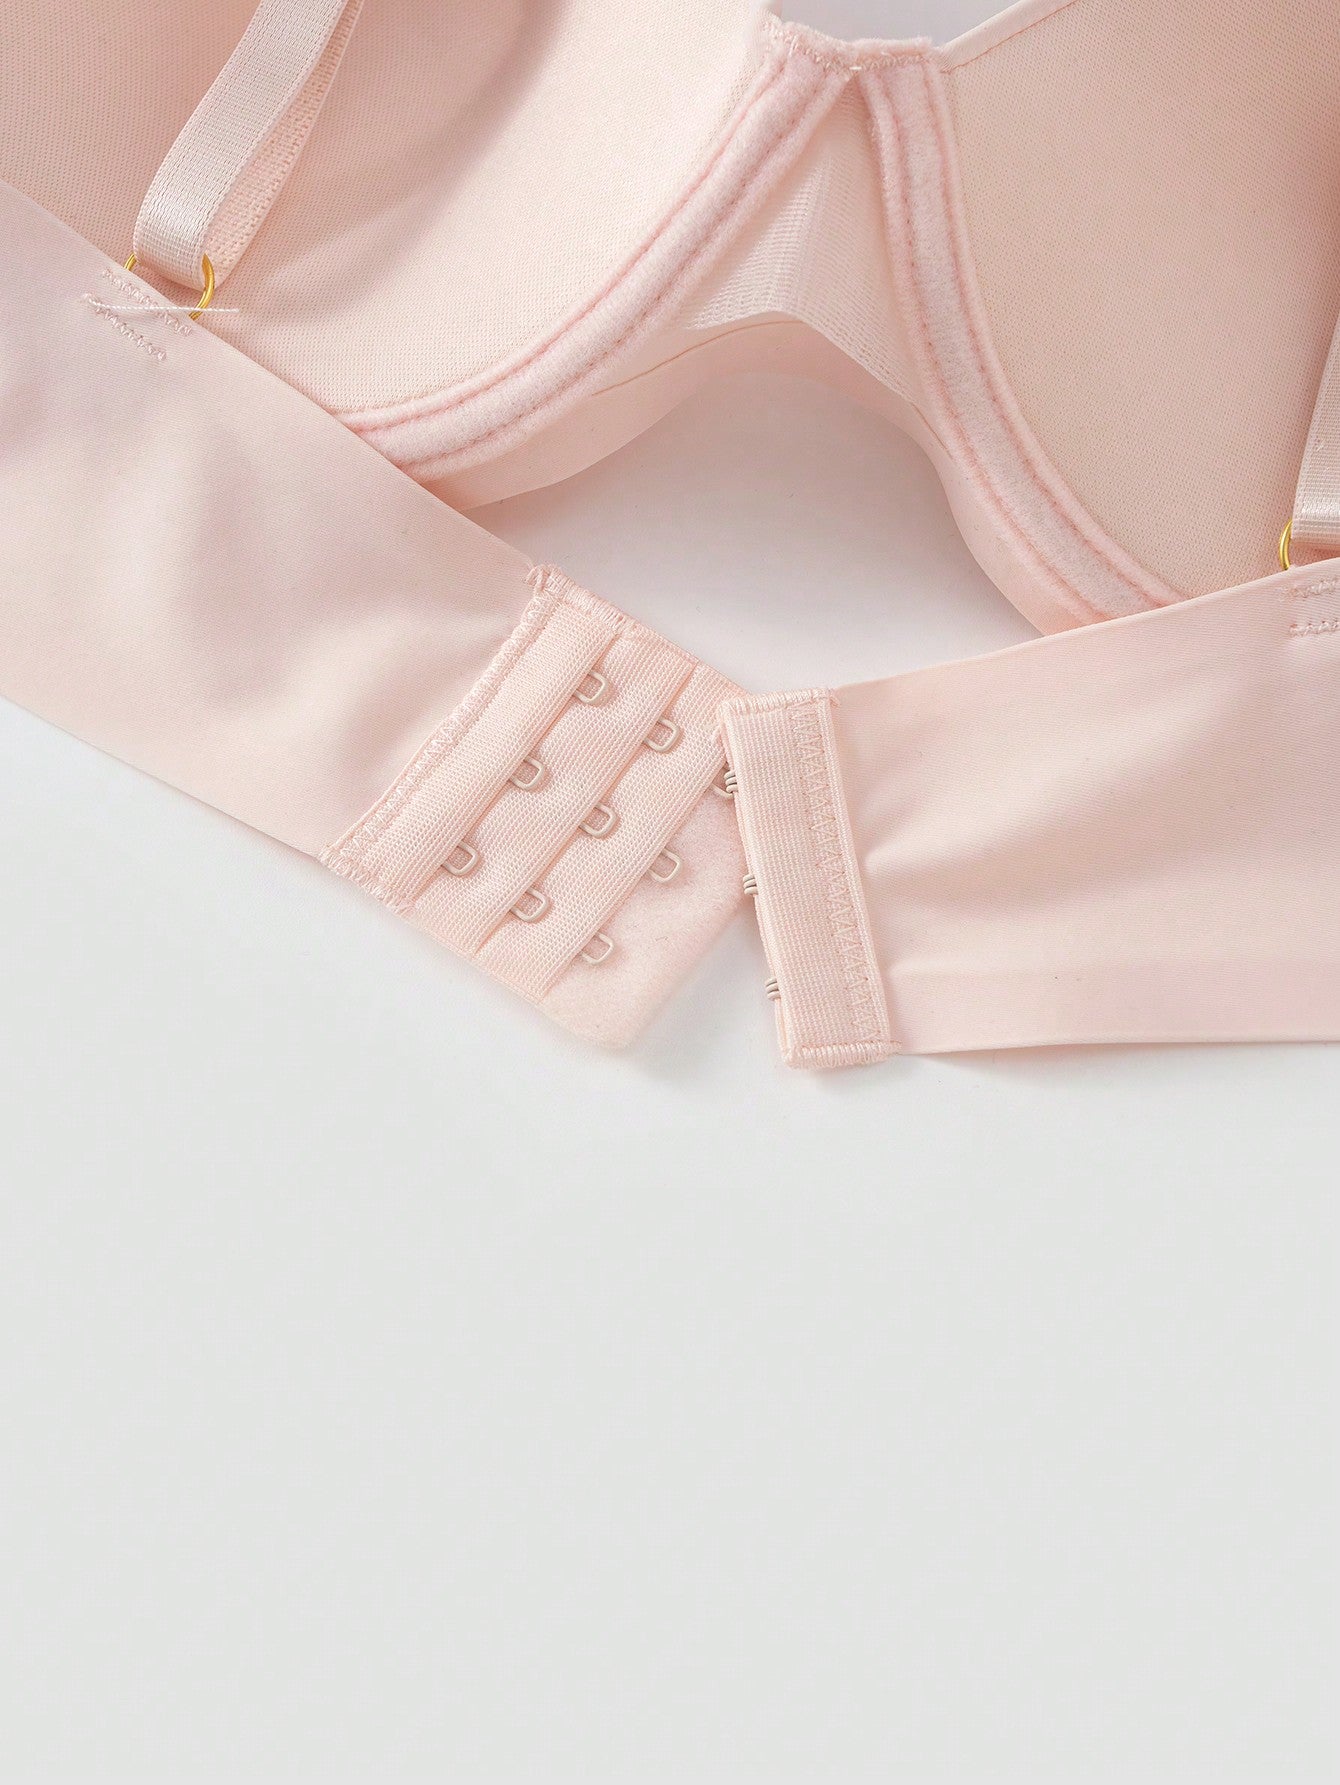 Women'S Underwear Bra (Underwire Padded Bra) 3pcs Seamless Bra Set